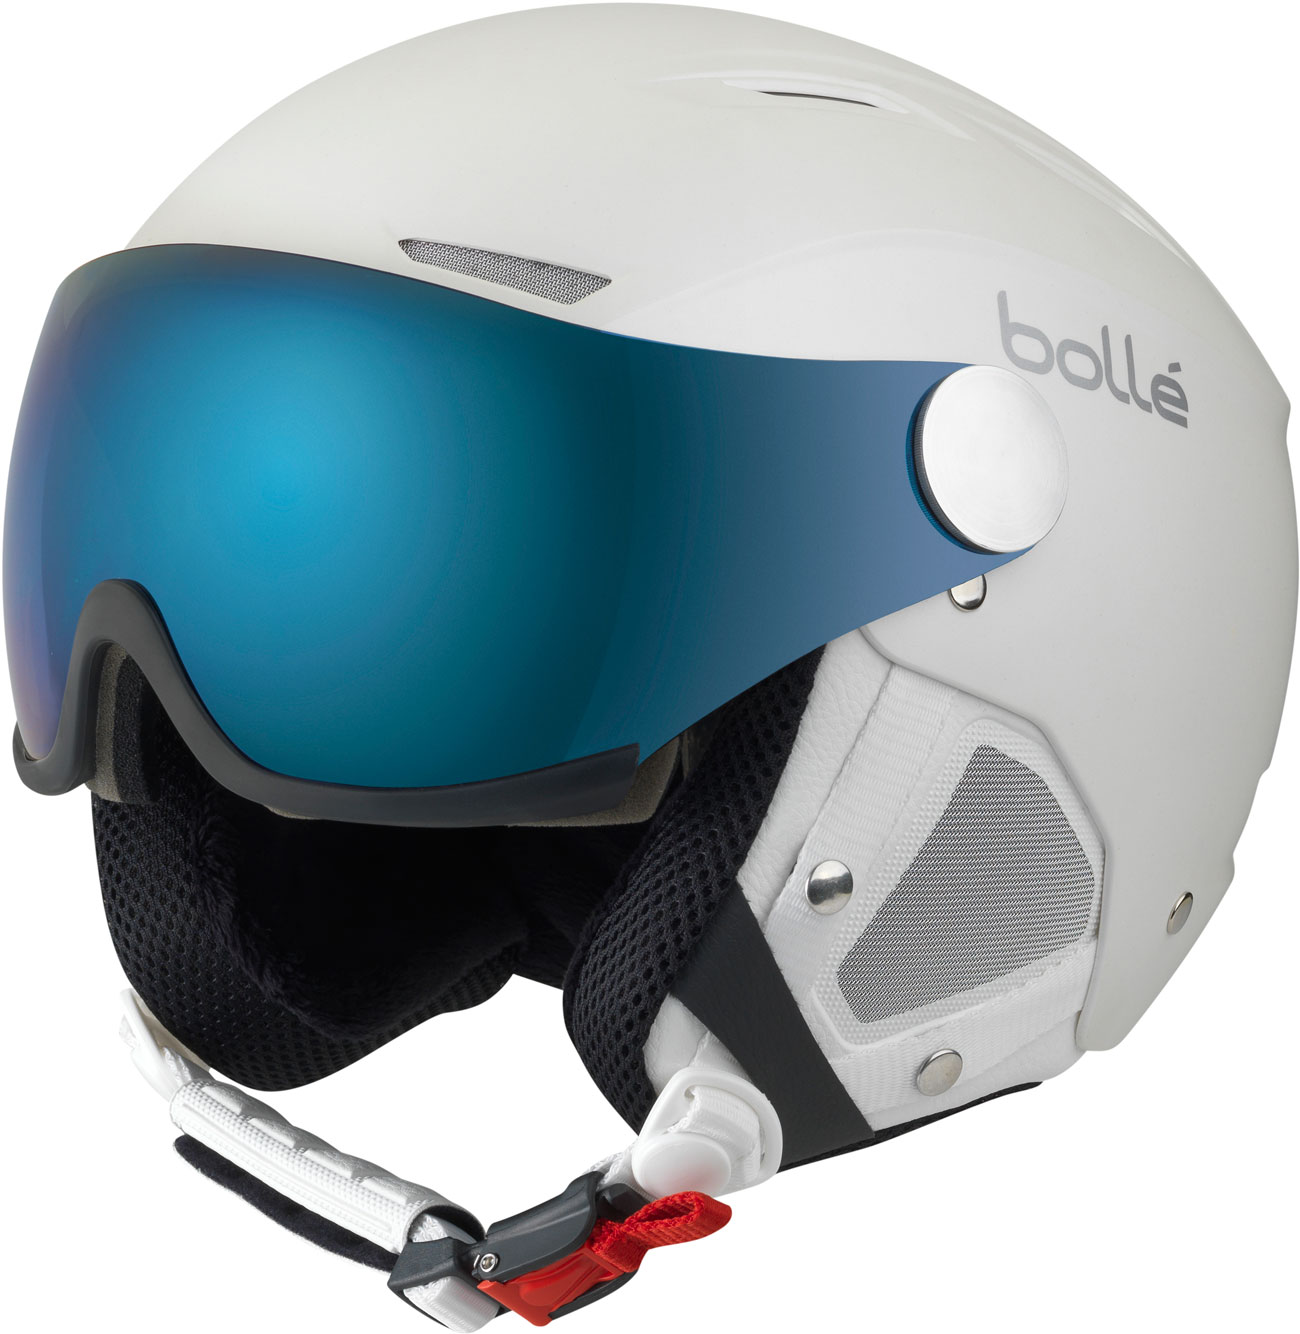 Personaliza Bollé Backline visor Premium